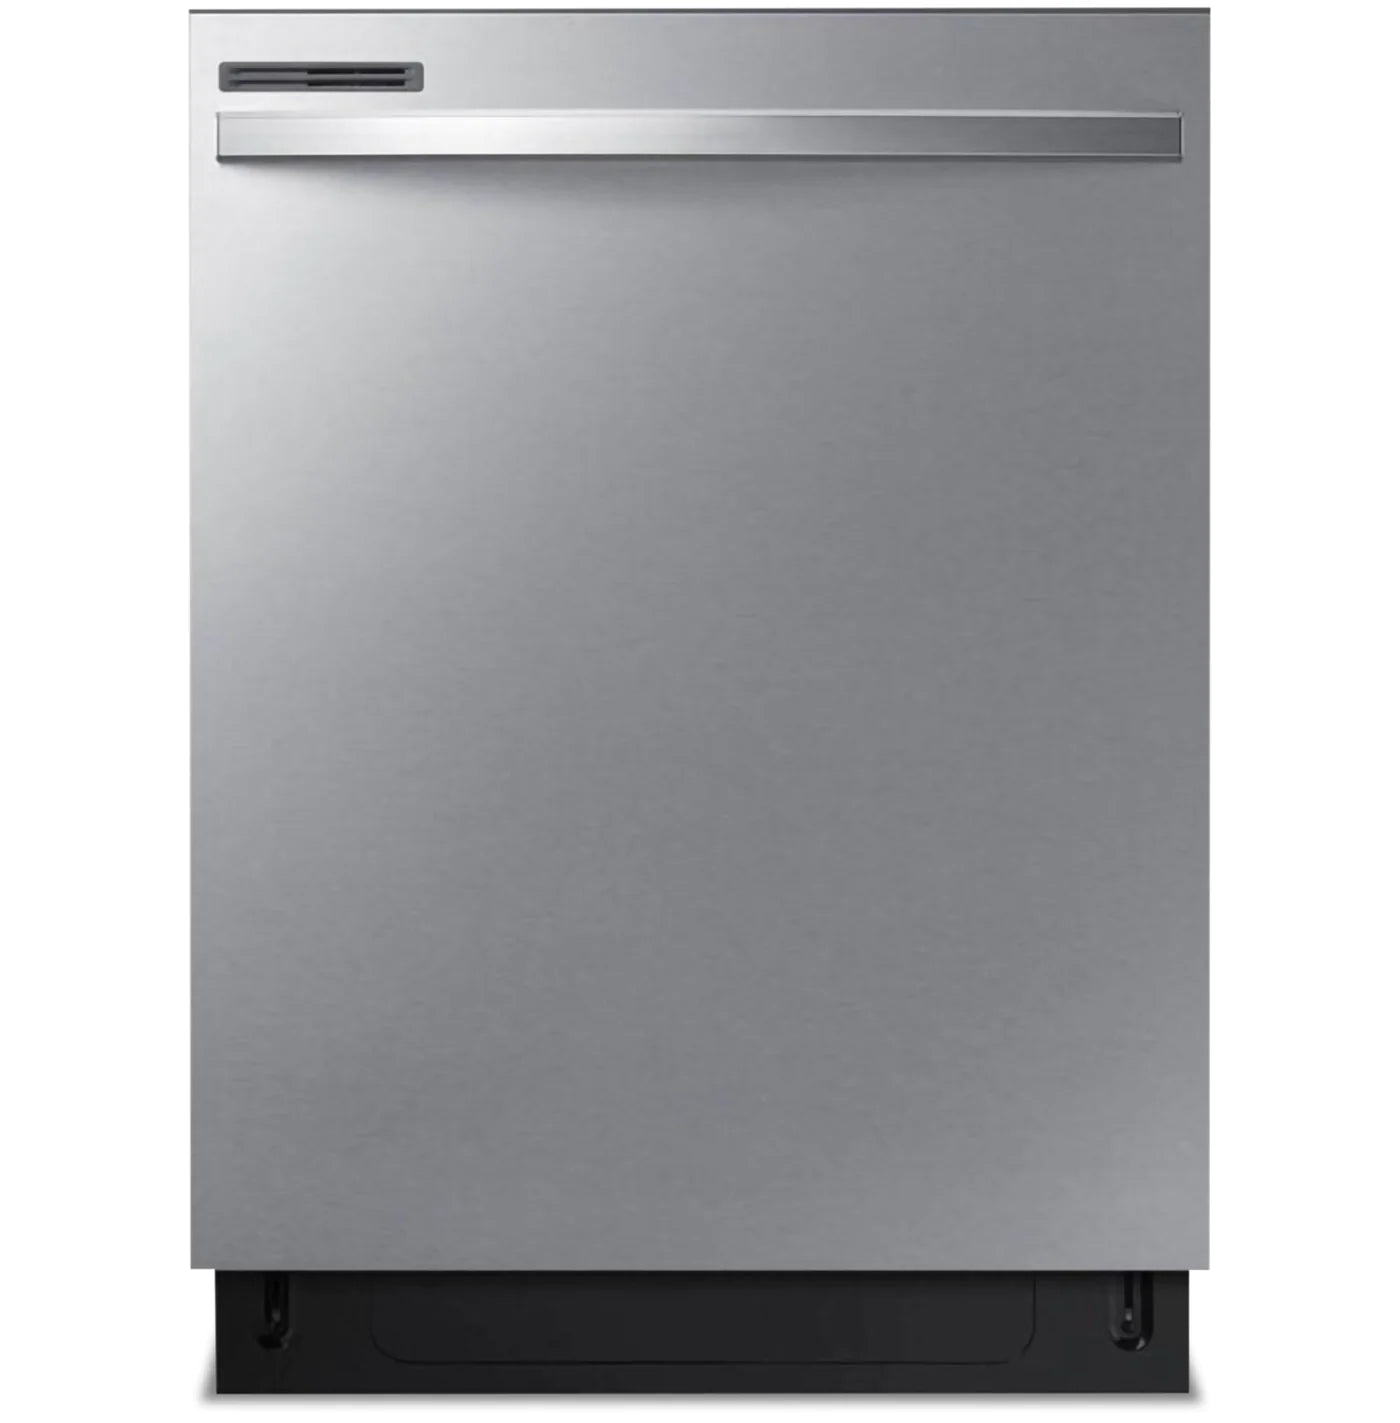 Samsung Dishwashers 24" Stainless Steel DW80R2031US